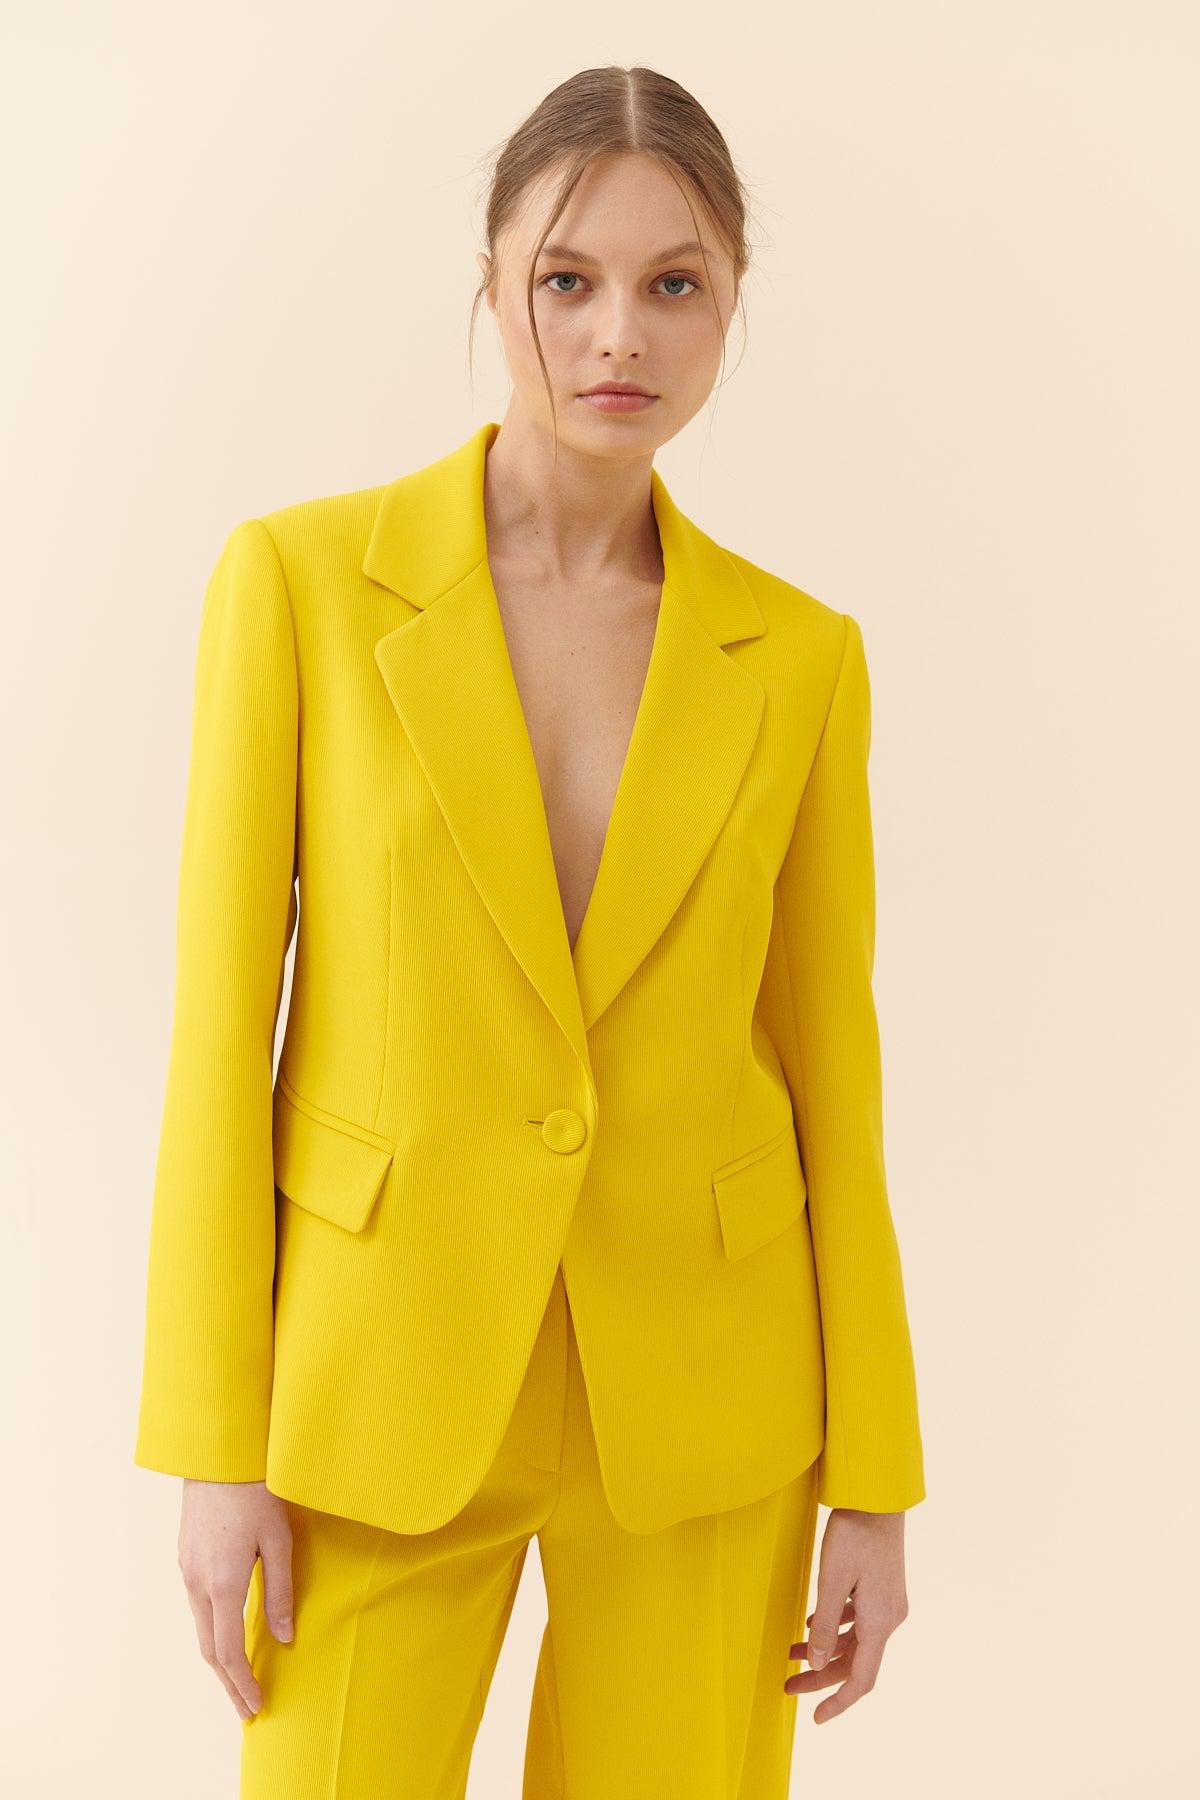 Sunflower Single Button Yellow Women's Blazer --[YELLOW]